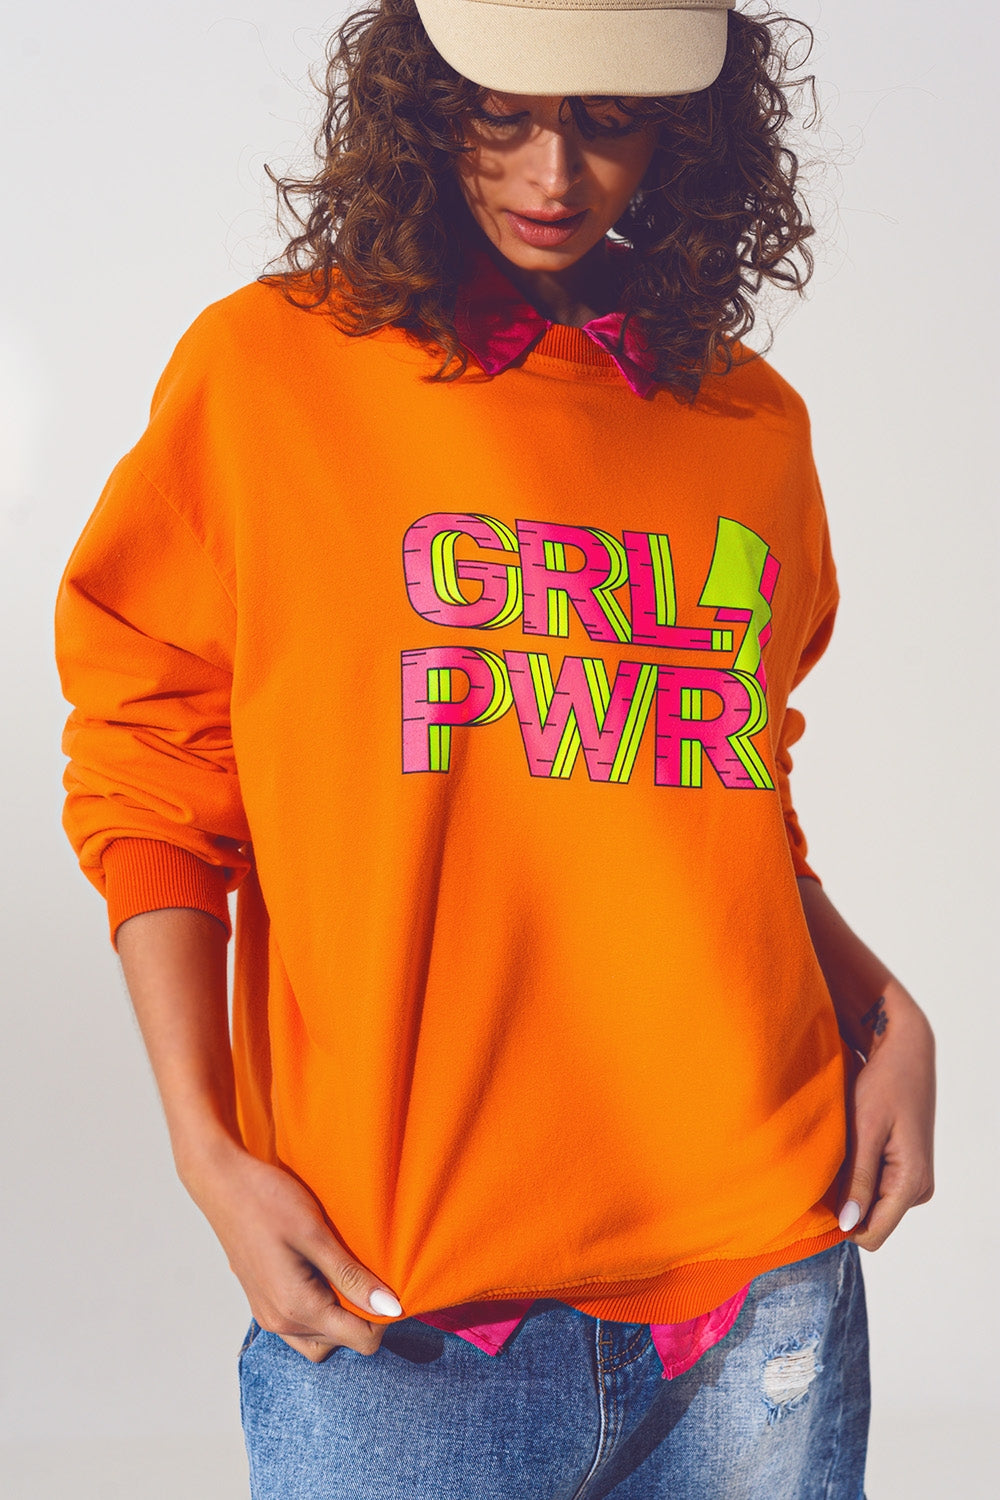 Q2 GRL PWR Text Sweatshirt in Orange